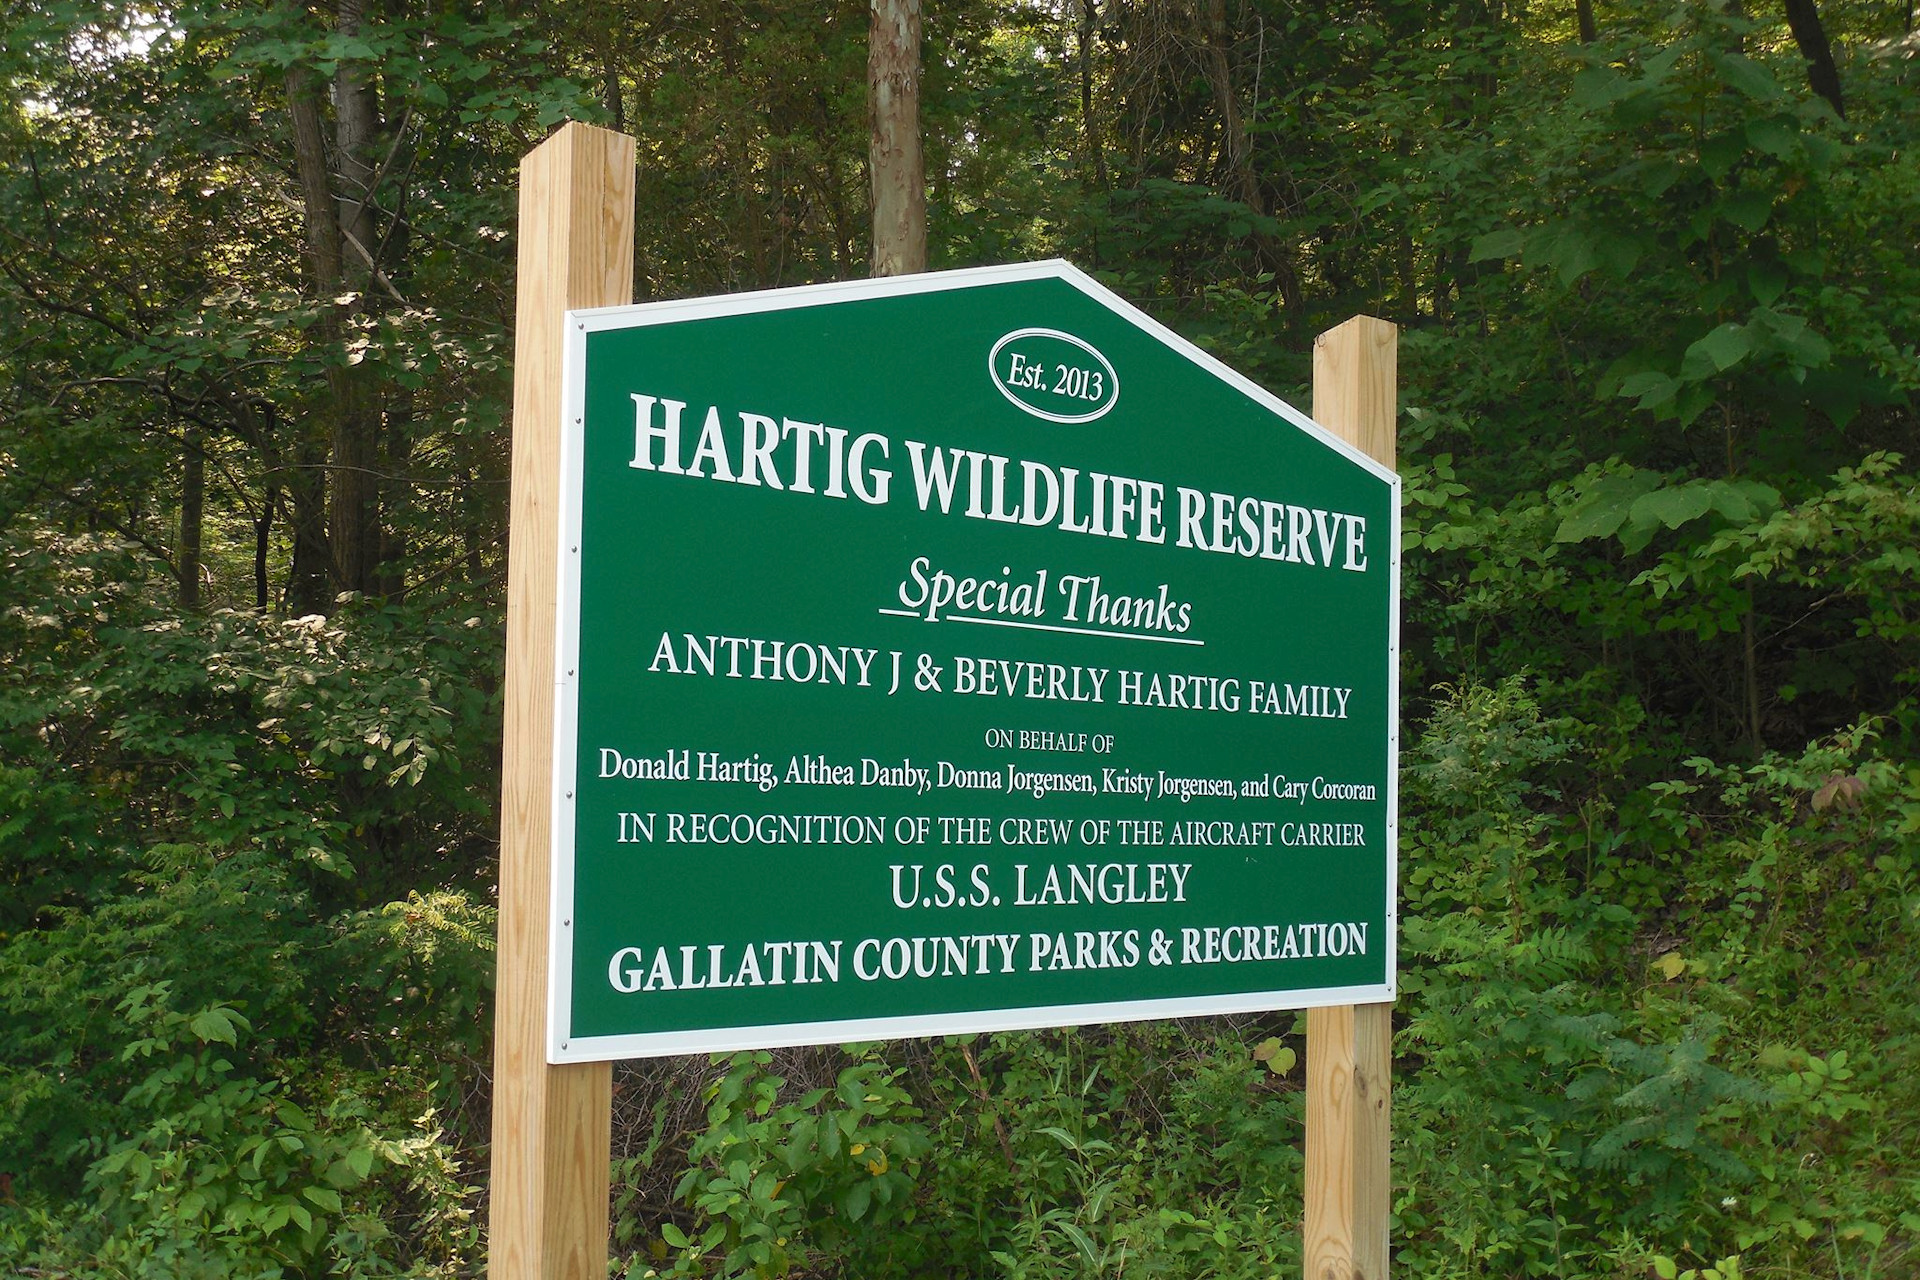 Camping at Hartig Park in Gallatin County, Kentucky